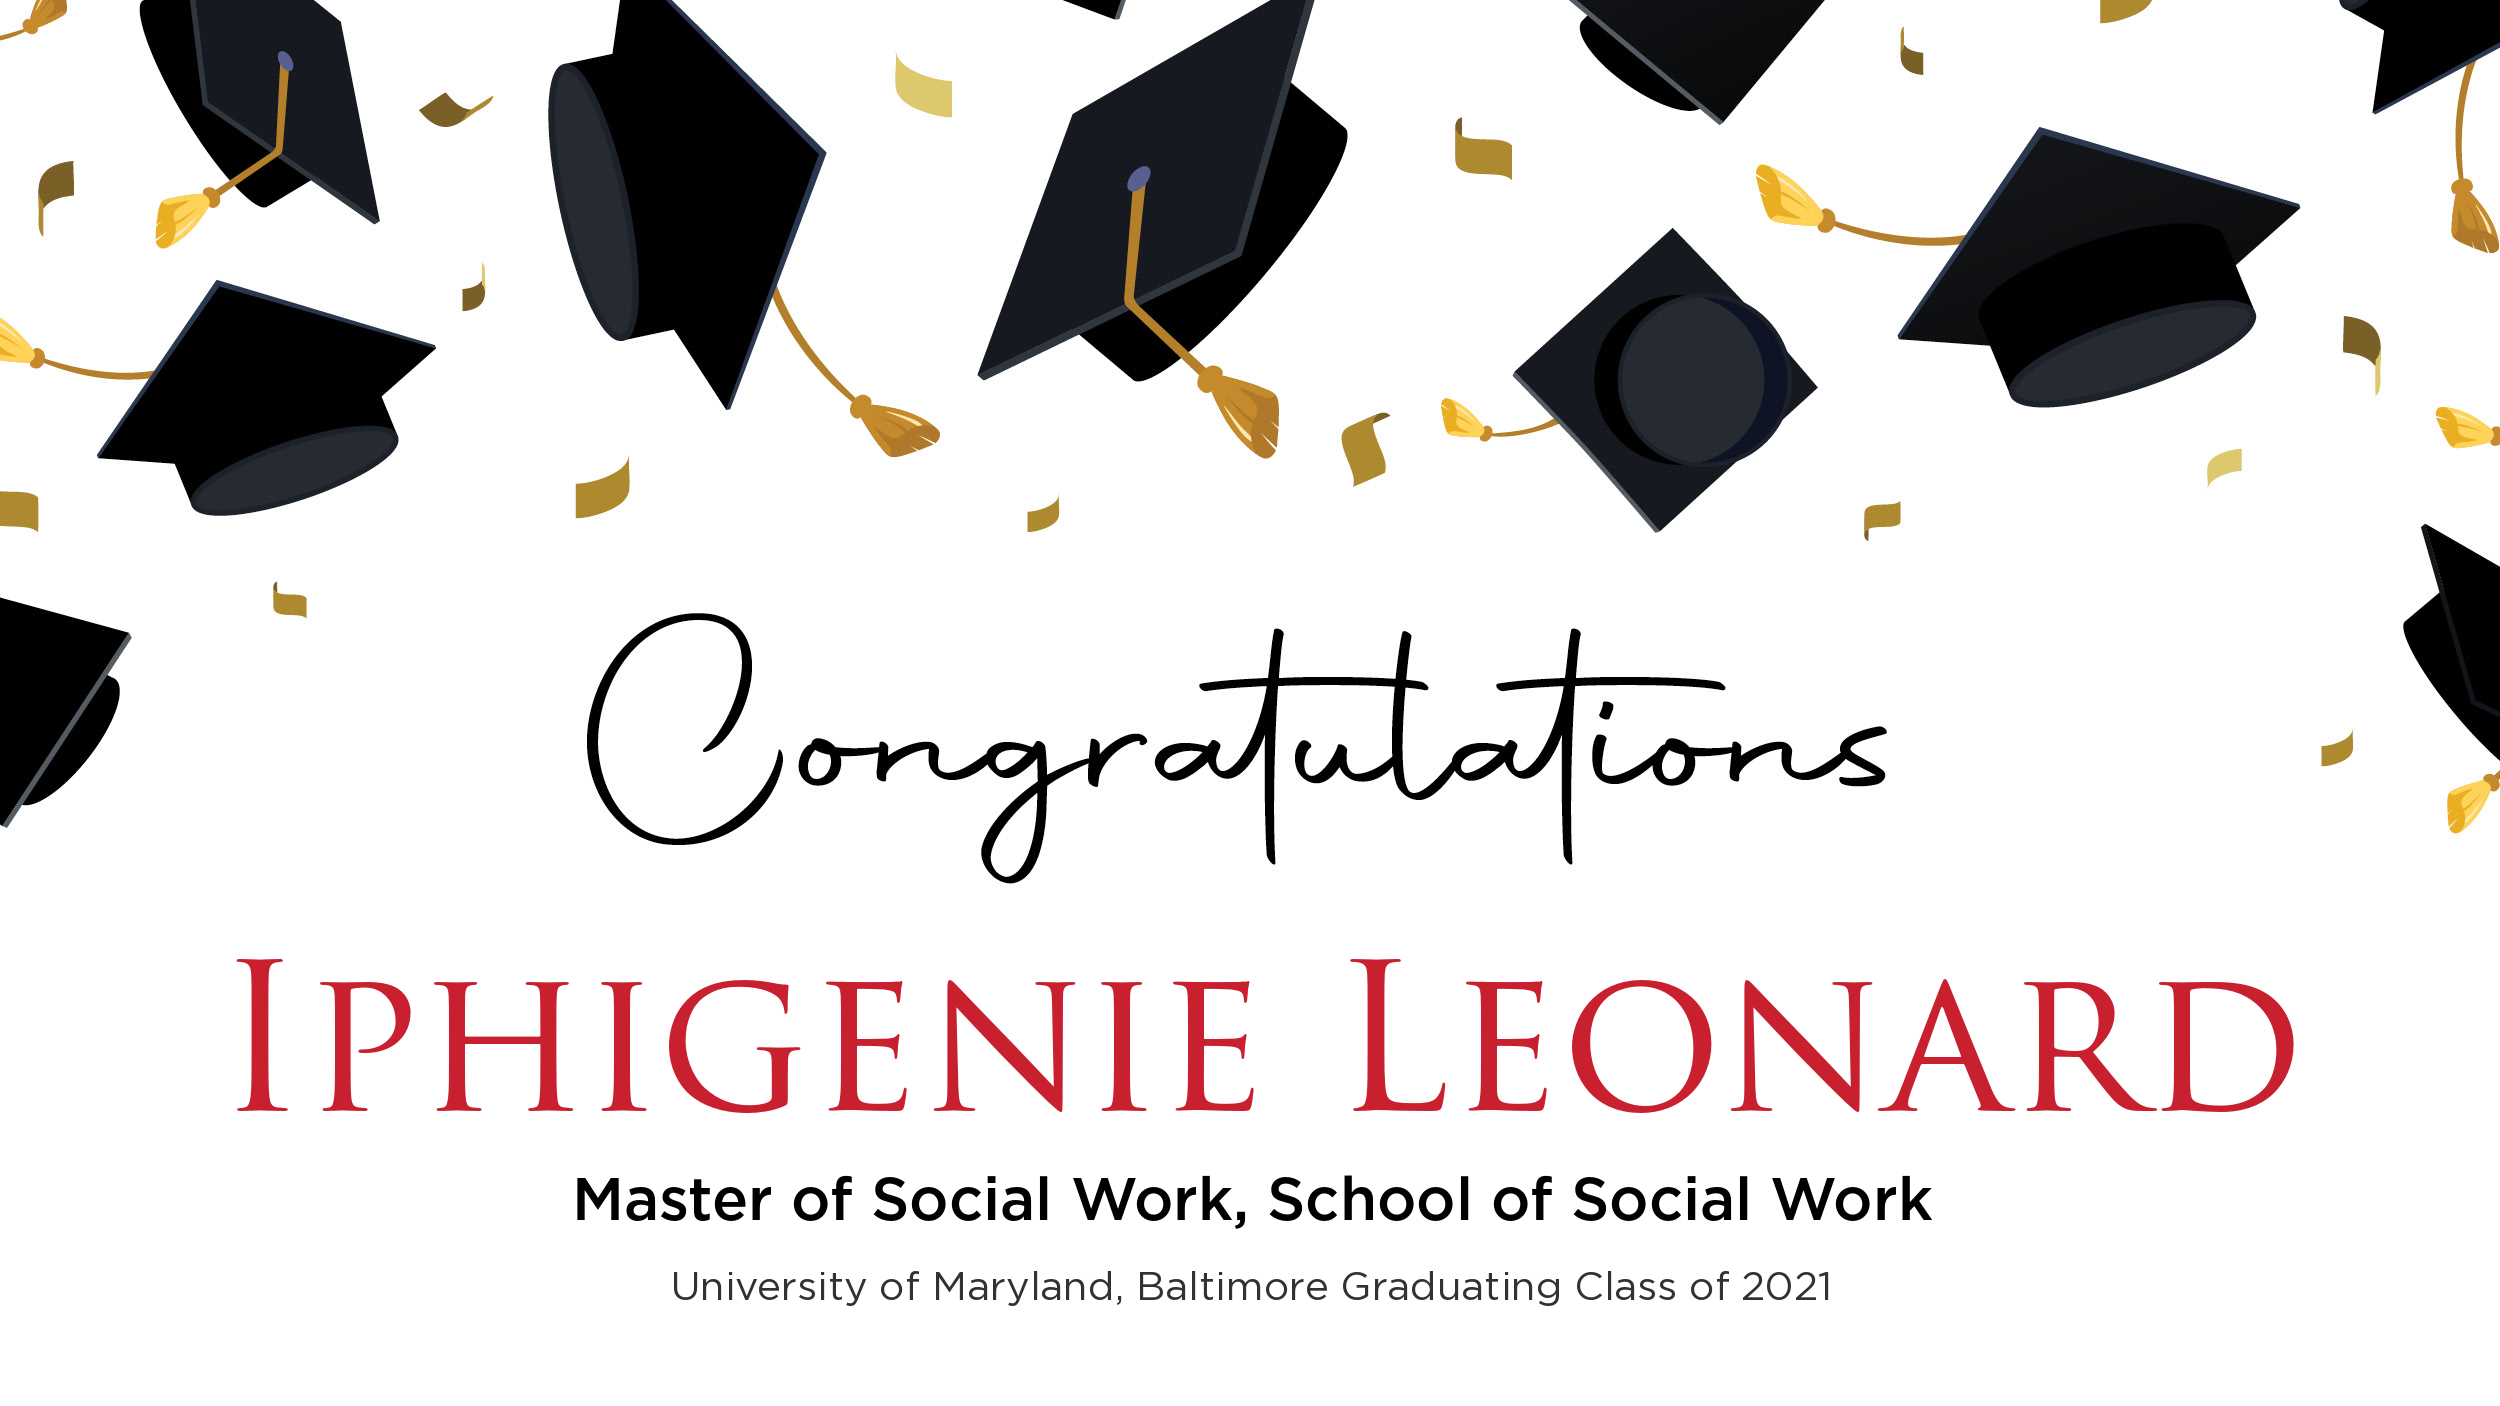 Congratulations Iphigenie Leonard, Master of Social Work